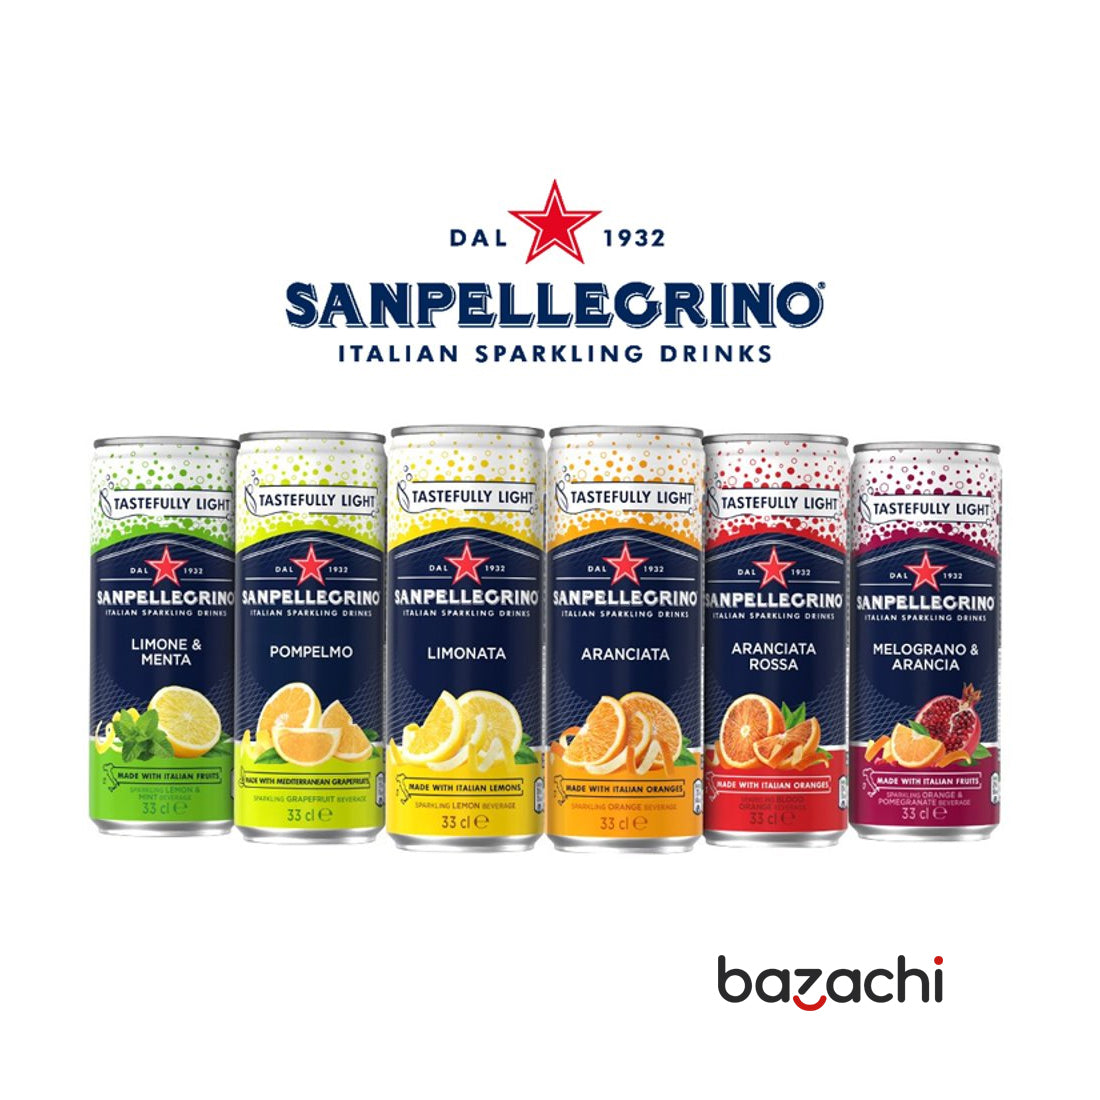 San Pellegrino Orange 330ml - Italian Sparkling Drink